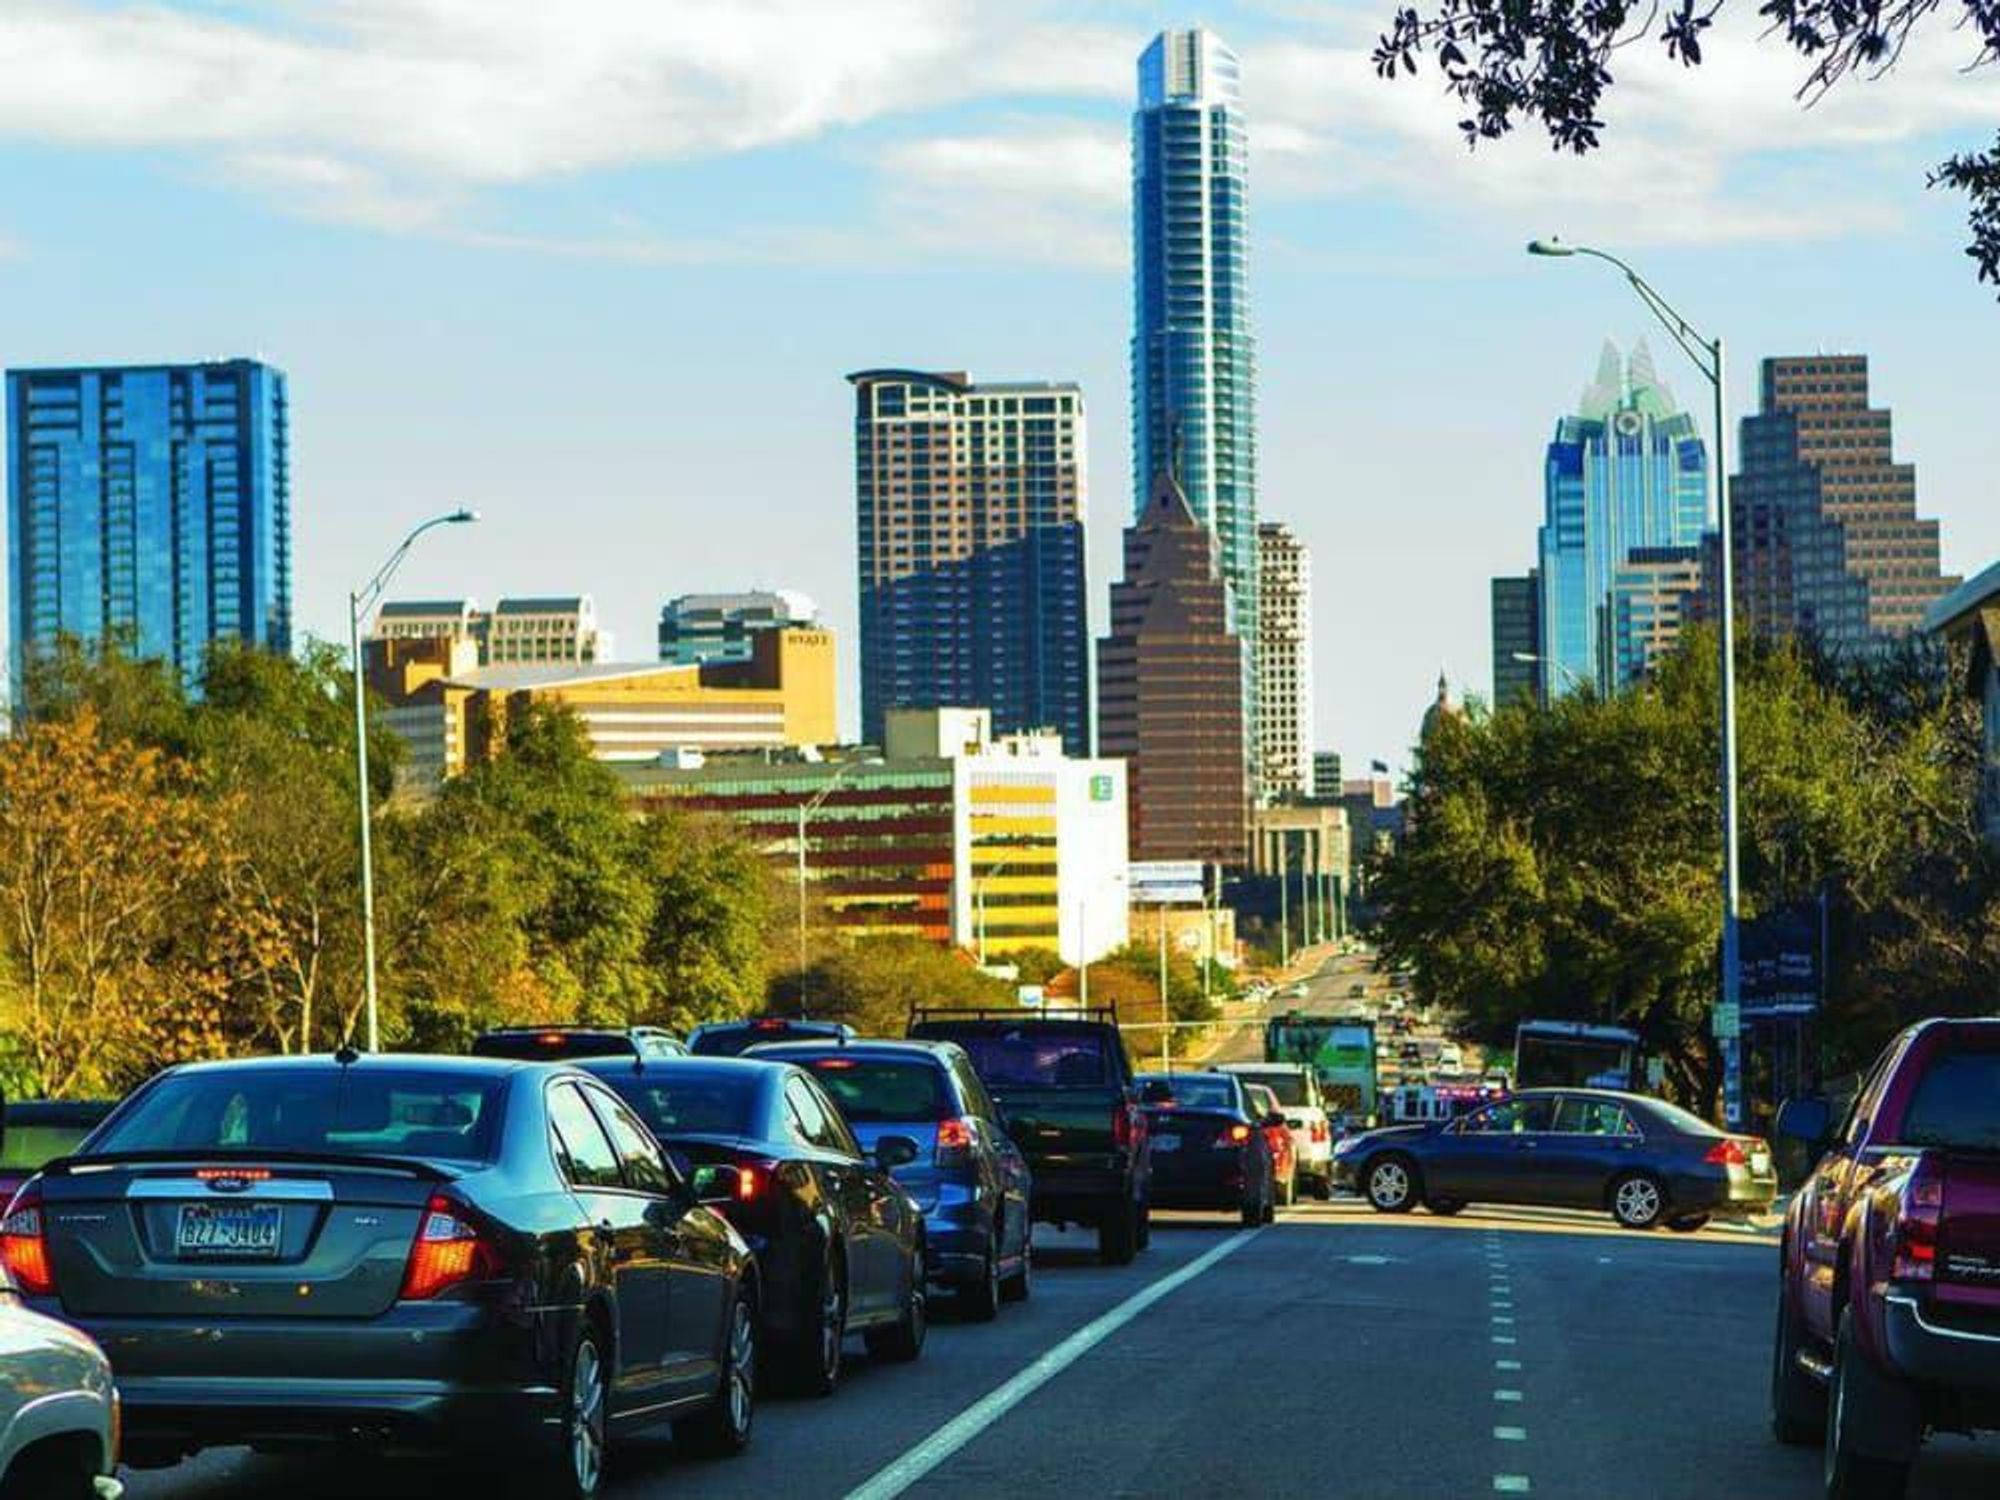 Traffic on South Congress Avenue in Austin